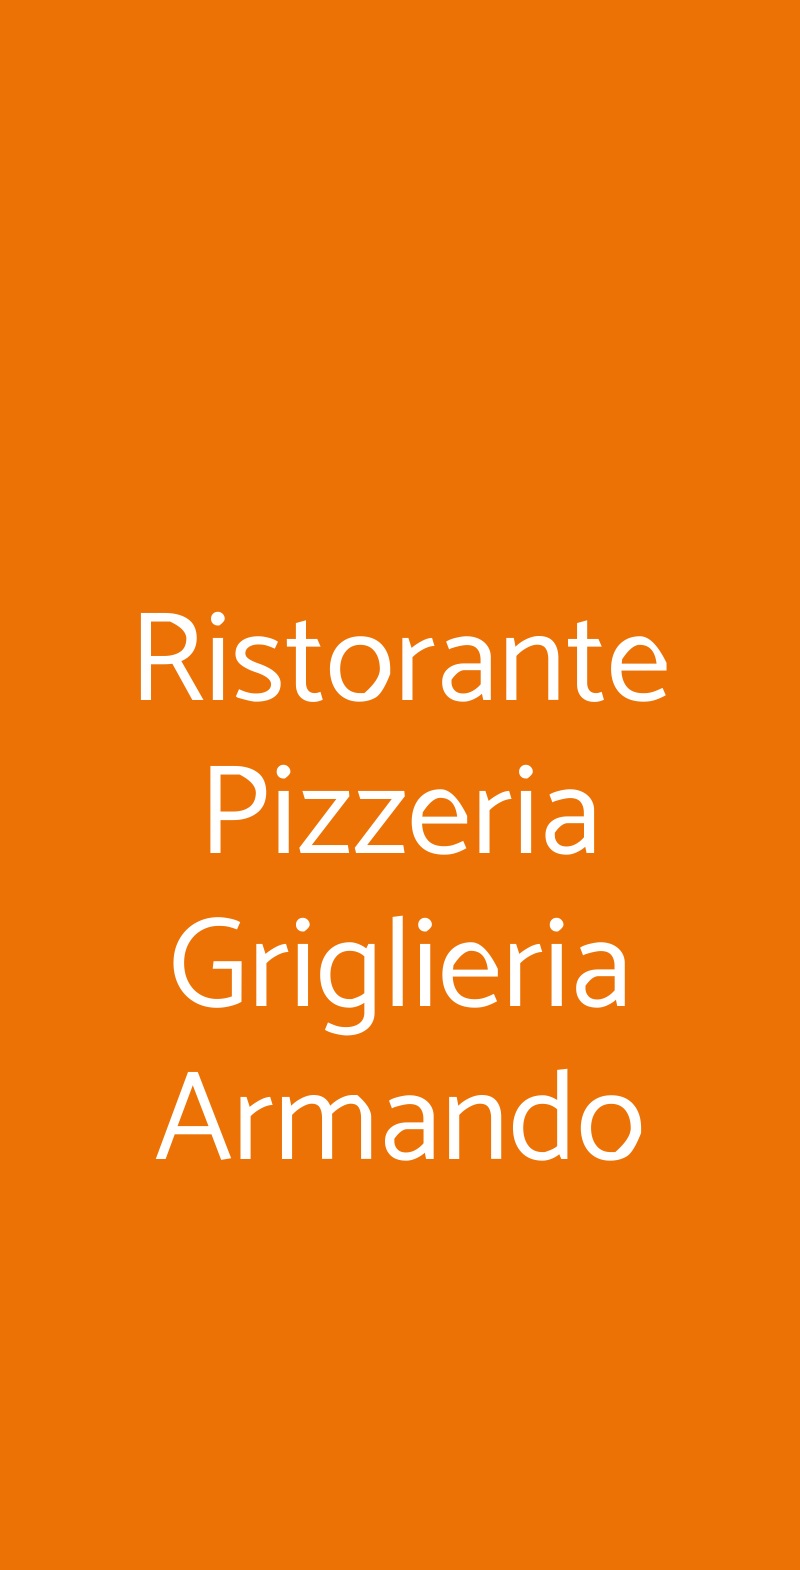 Ristorante Pizzeria Griglieria Armando Roma menù 1 pagina